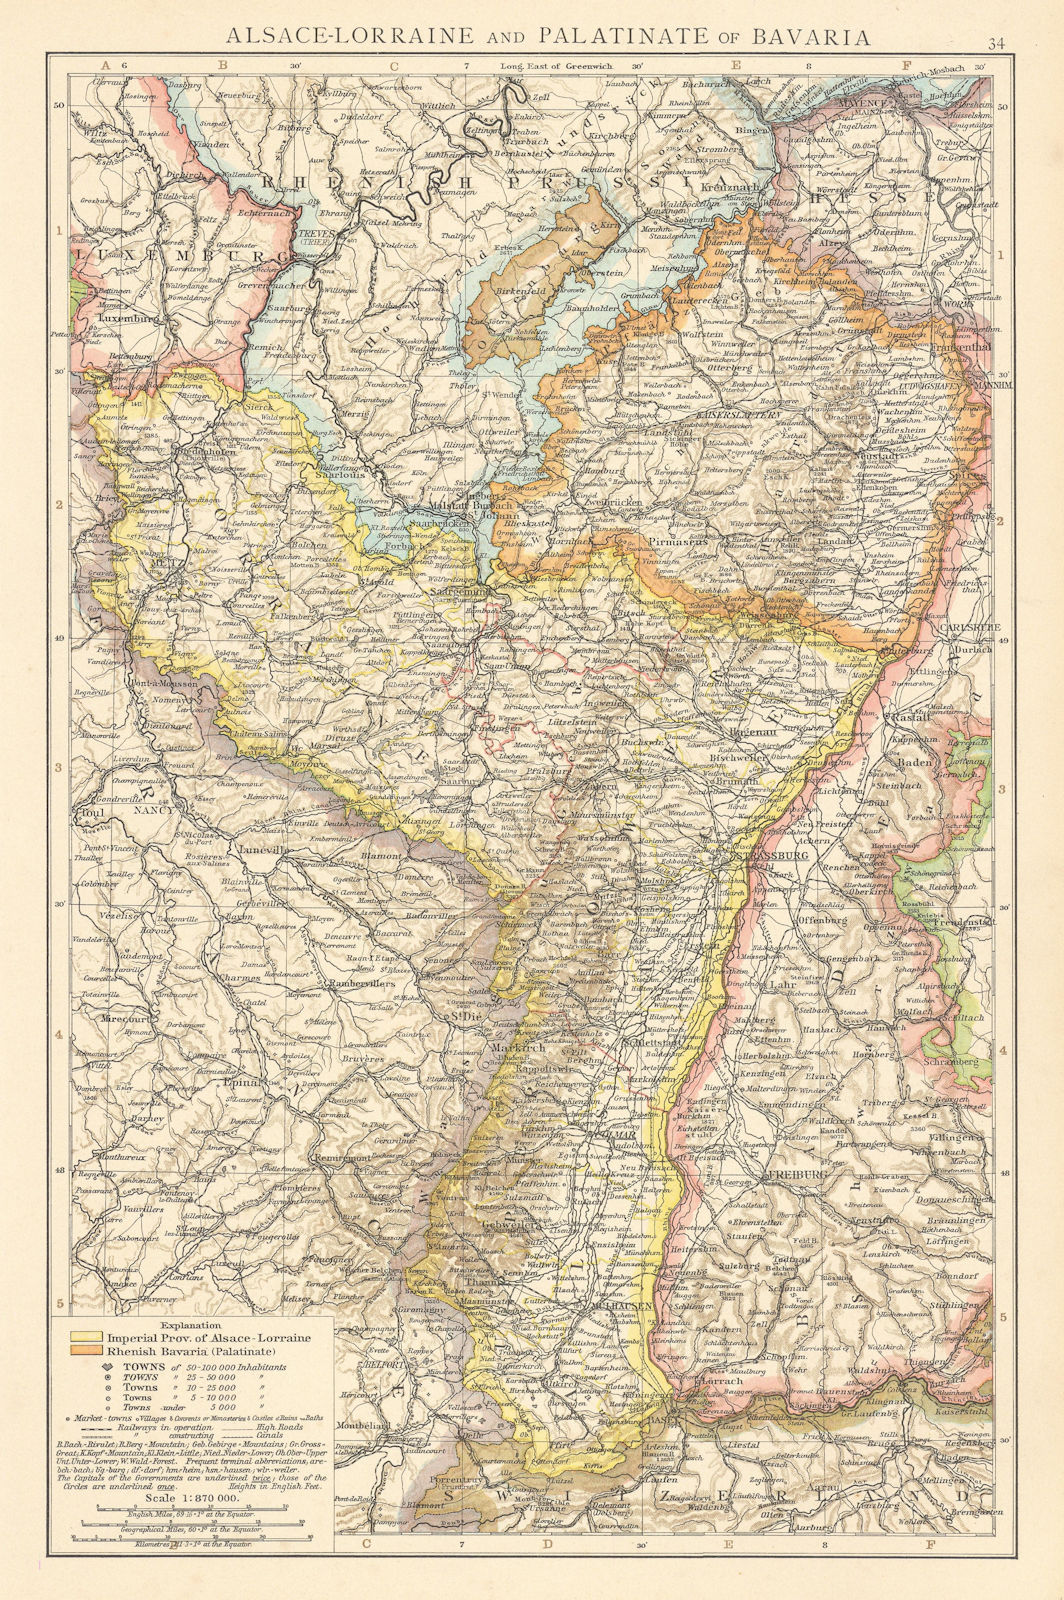 Rhine valley. Alsace-Lorraine & Palatinate of Bavaria. Rhineland. TIMES 1895 map